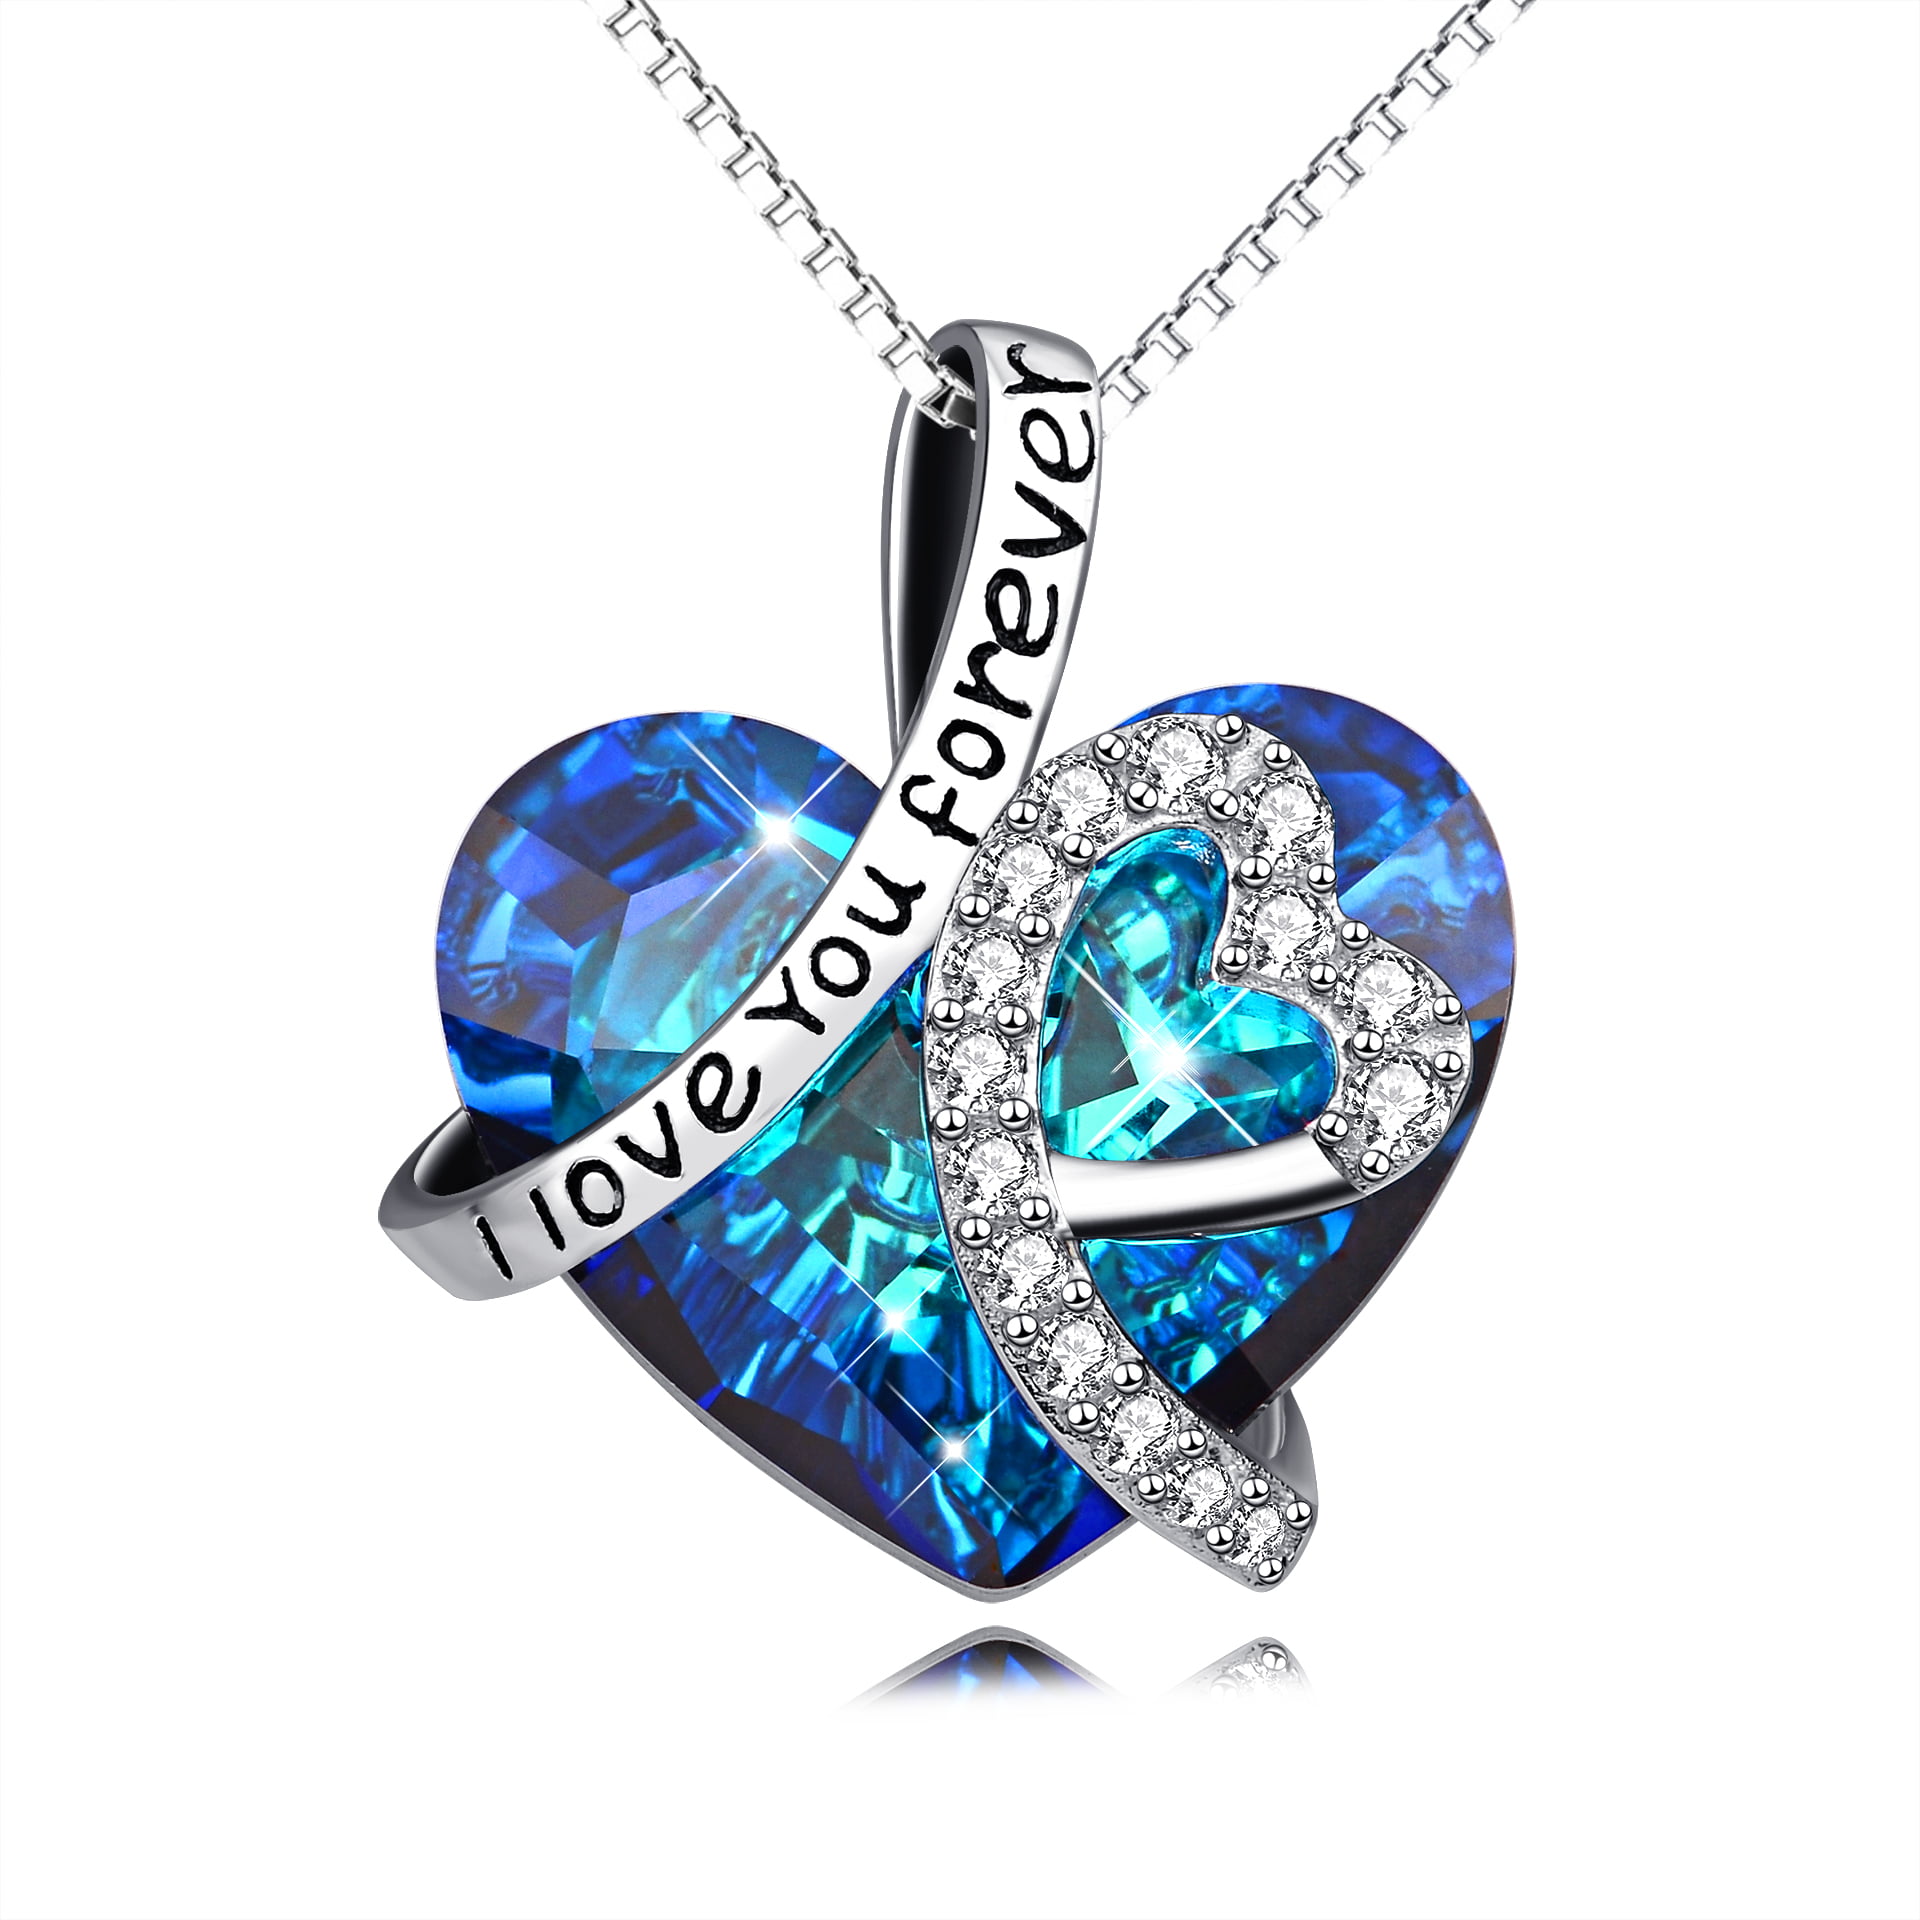 Love Heart Pendant Cross Necklace Chain Silver Jewelry Women Men Gifts Charm New